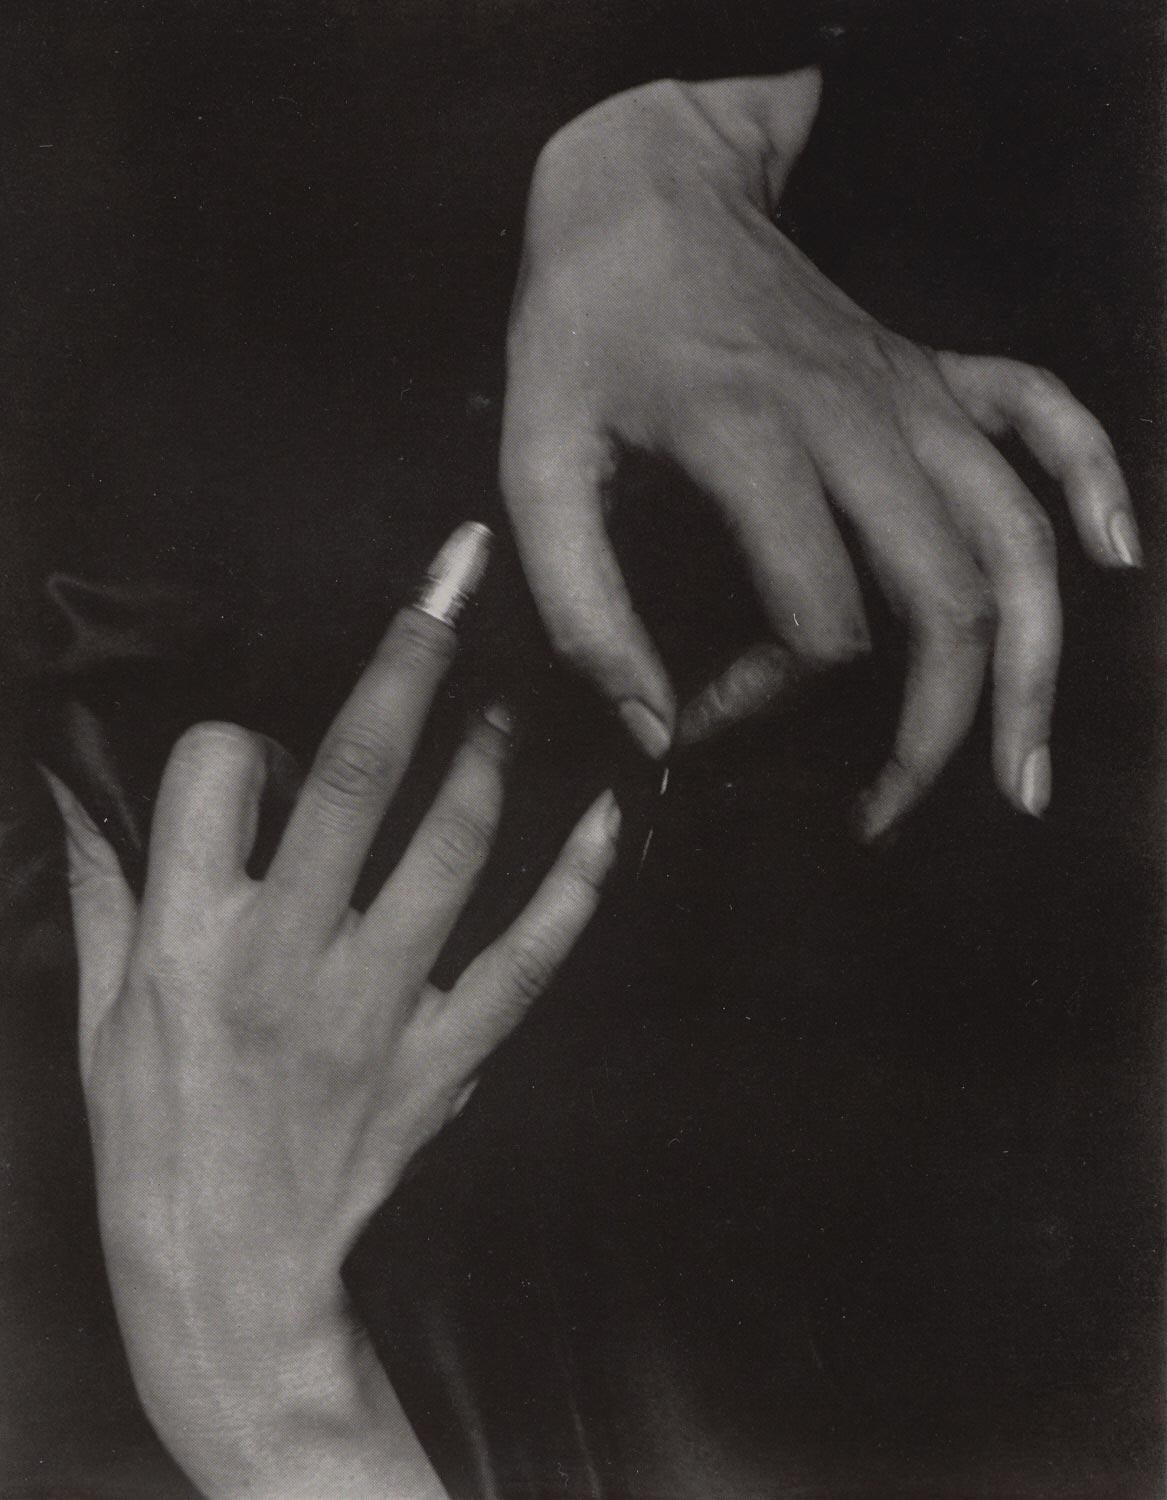 Stieglitz, O'Keeffe Hands w/Thimble, Alfred Stieglitz Memorial Portfolio (nach)